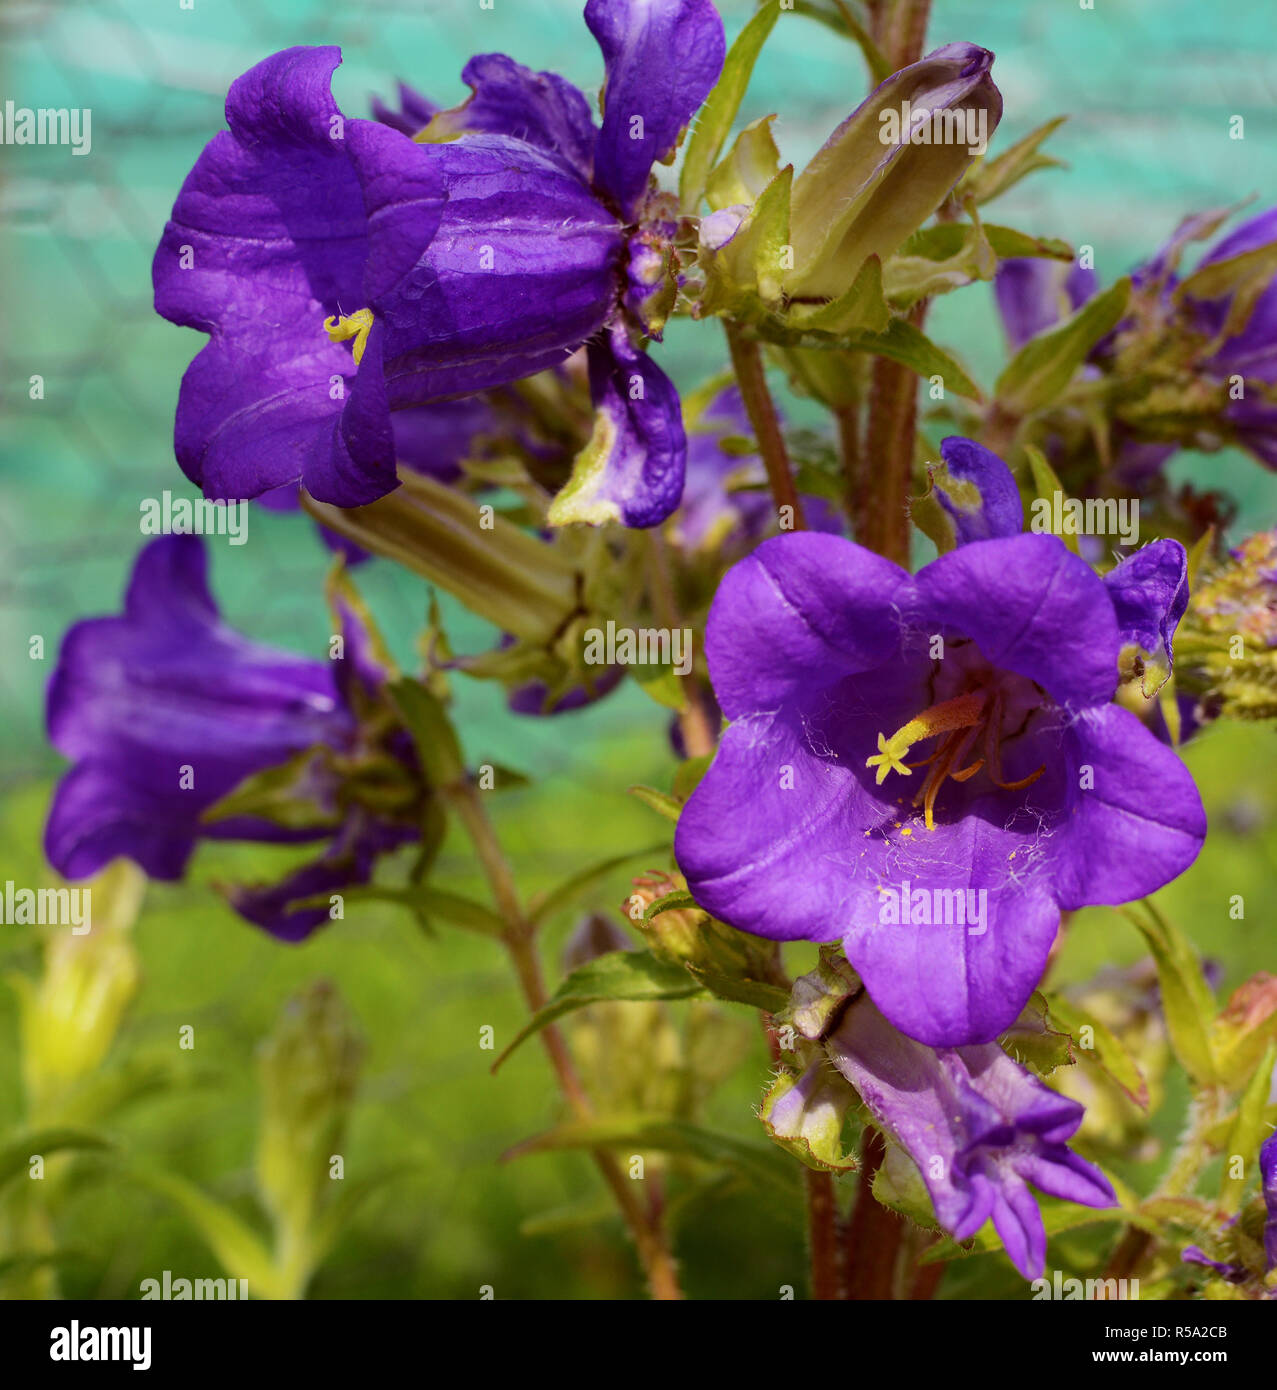 Purple flowers of a campanula plant Stock Photo